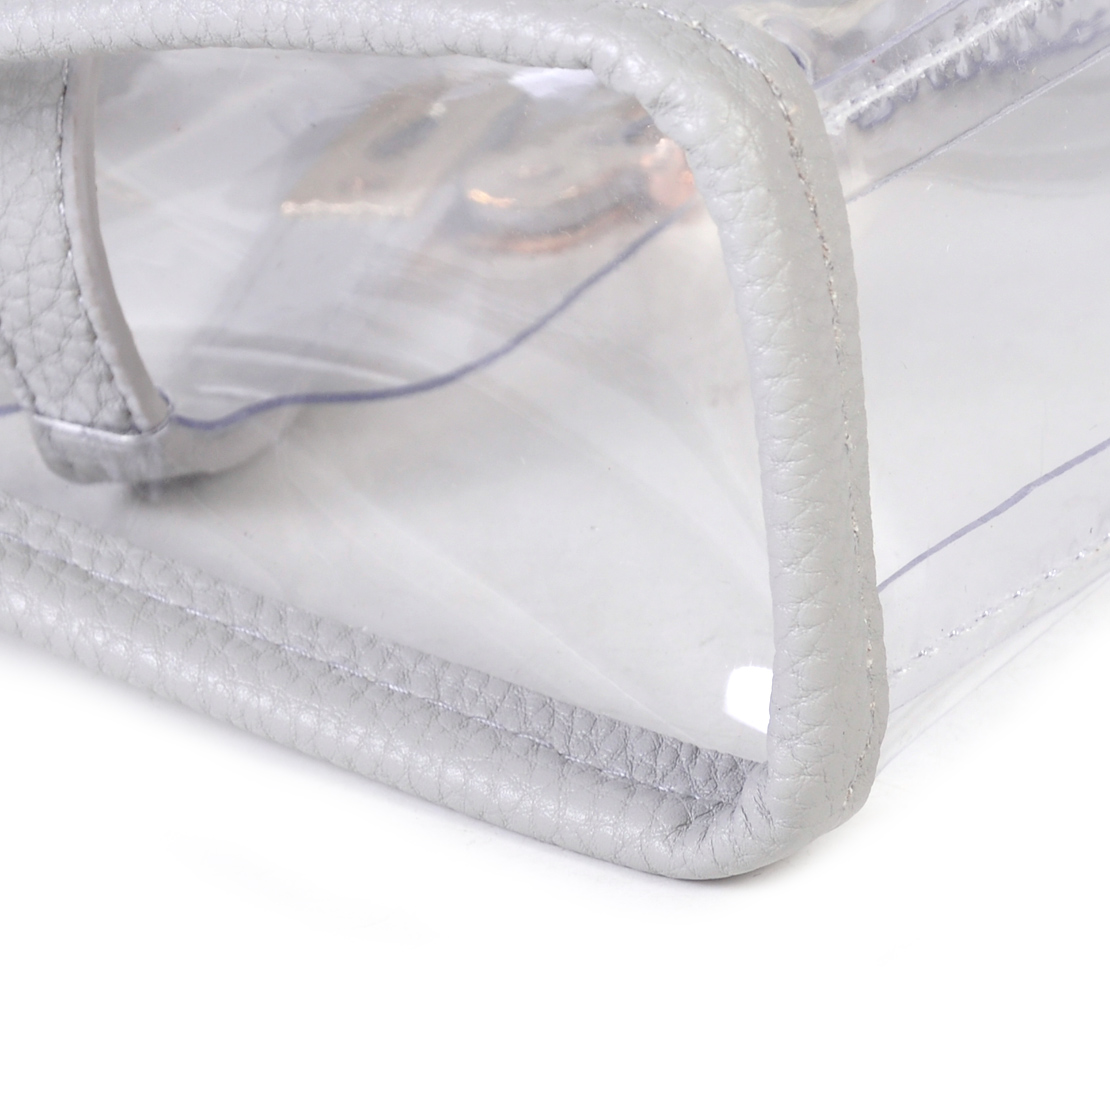 Women PVC Transparent Clear Cross Body Handbag Shoulder Tote Crossbody Bag Purse